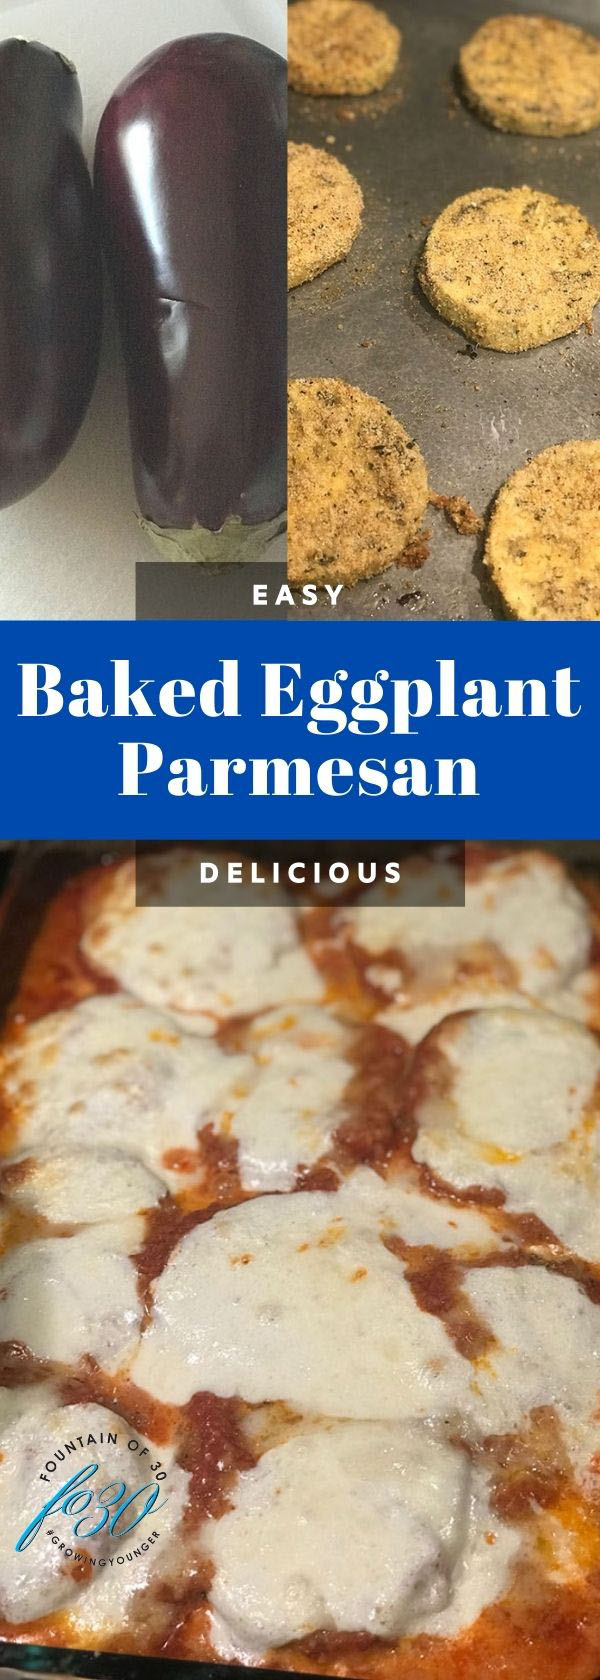 baked eggplant parmesan recipe fountainof30